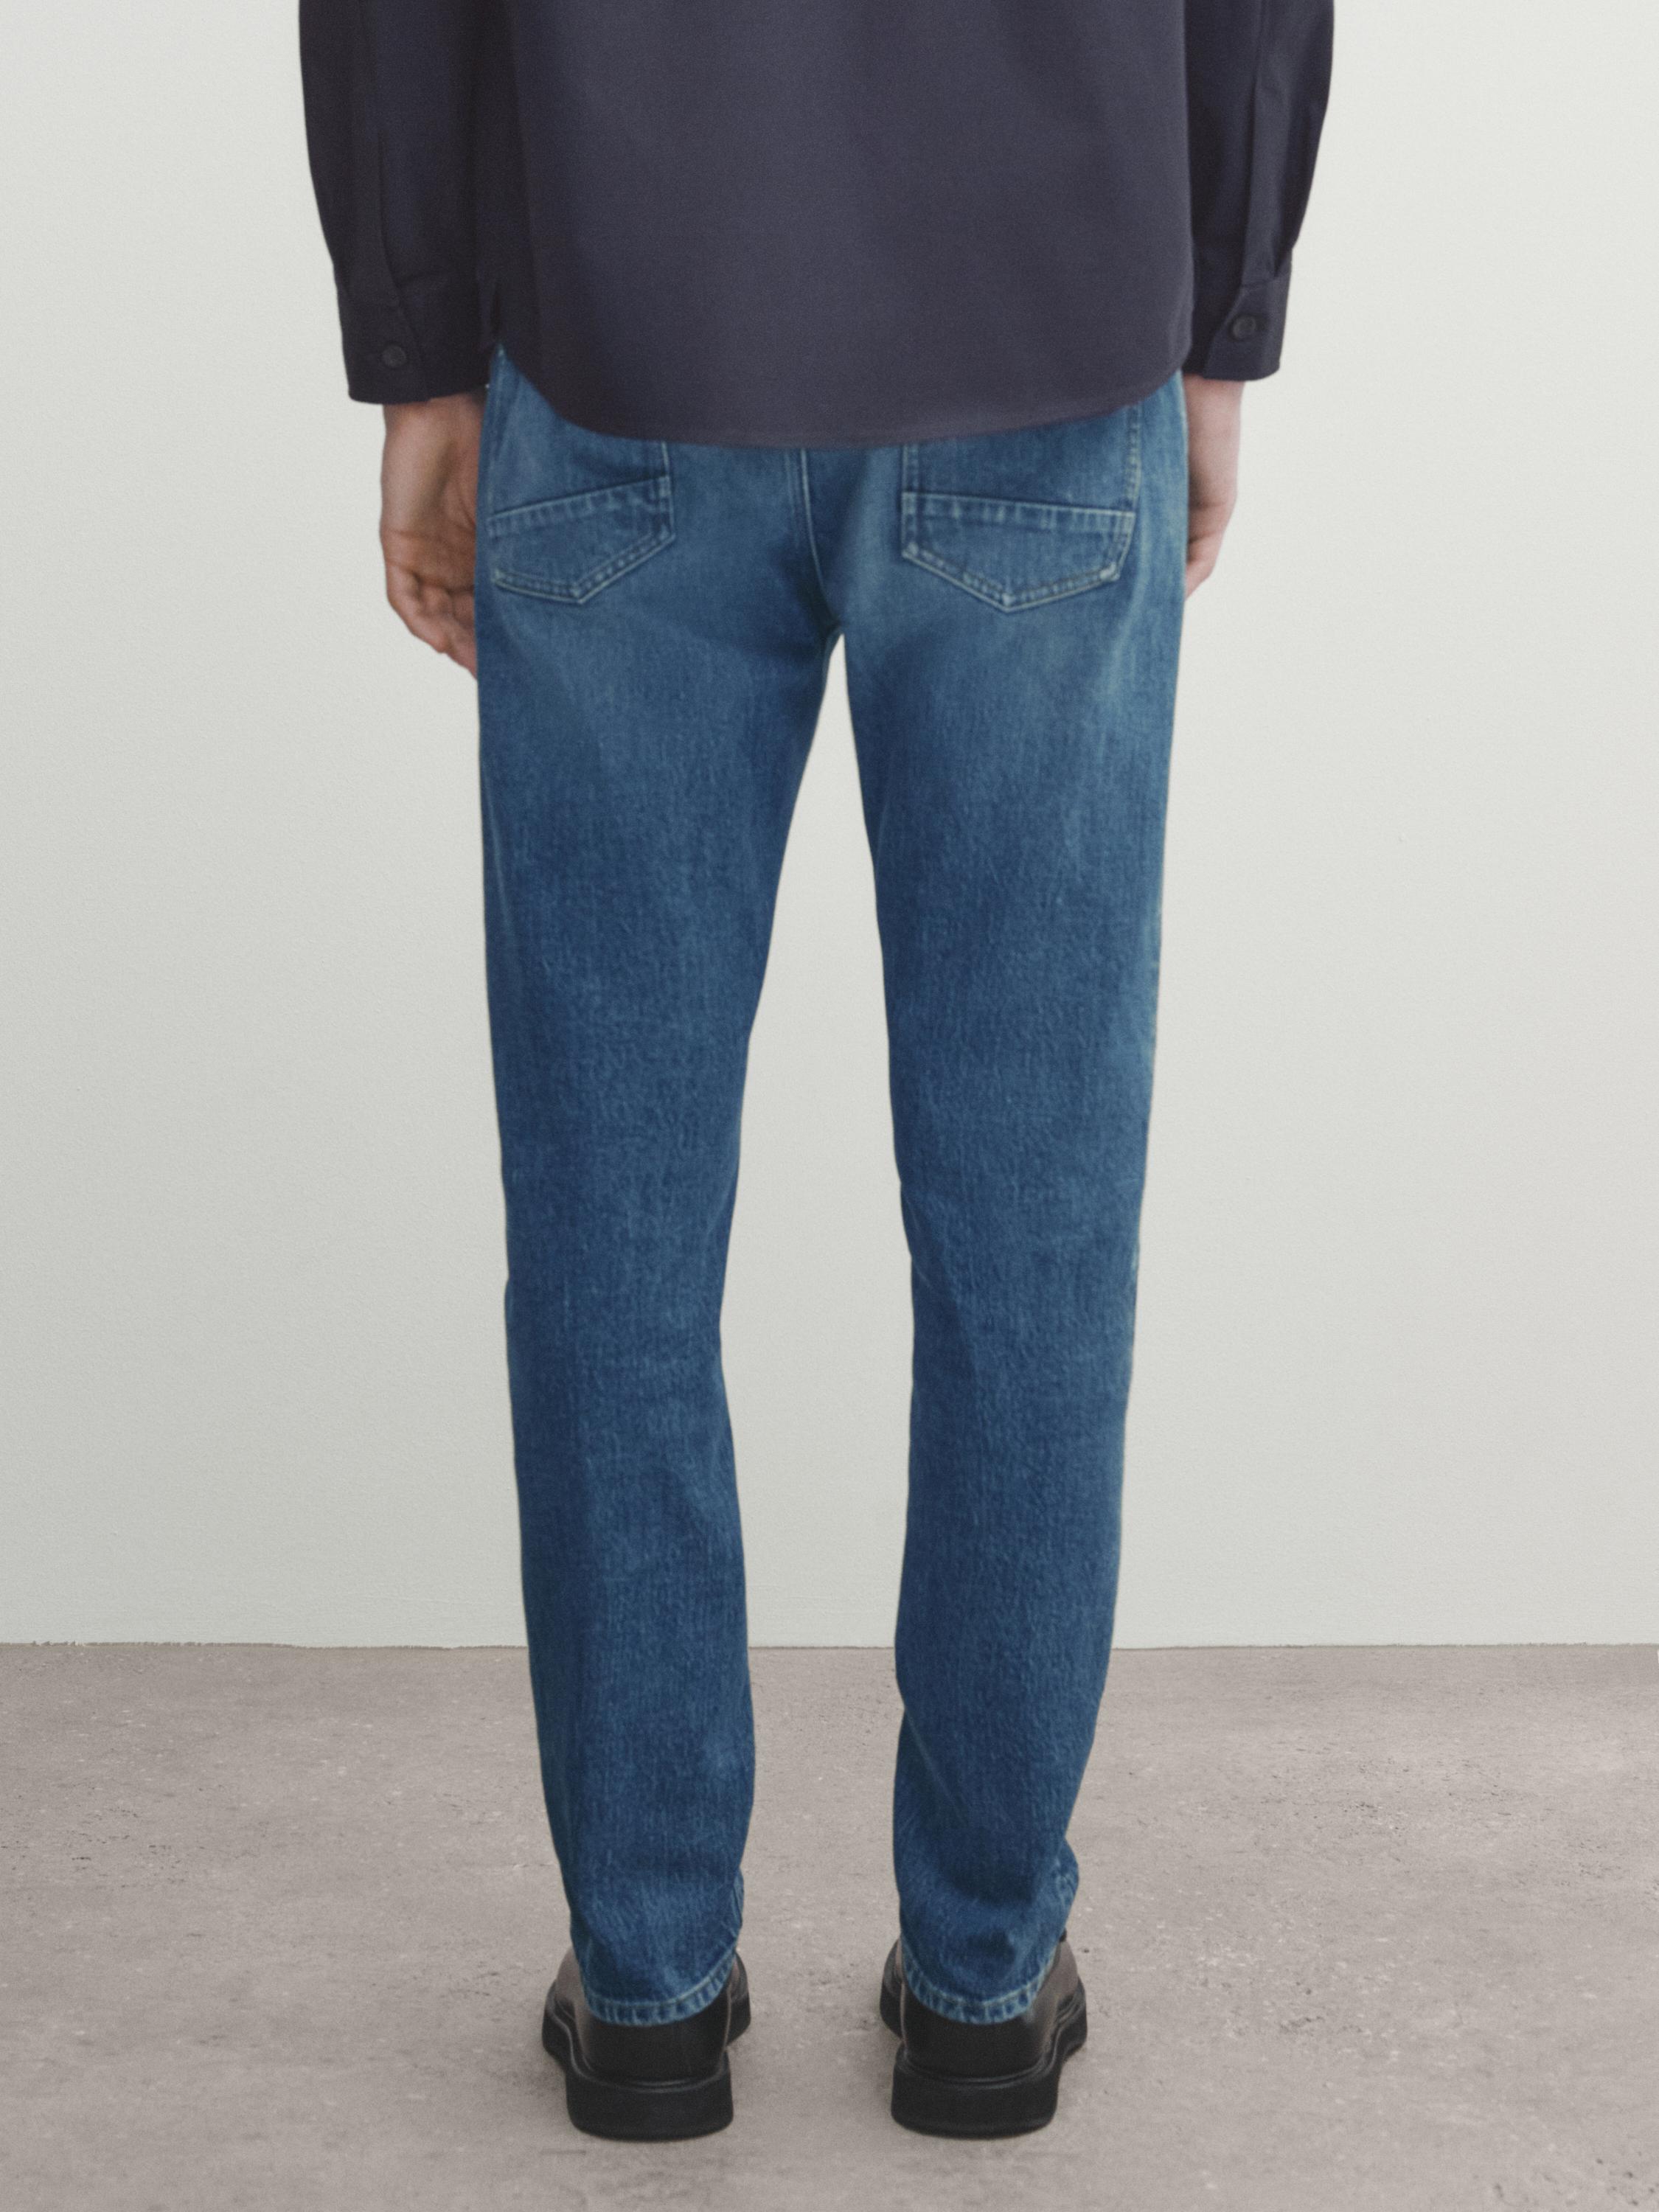 Zara Men Basic slim fit jeans 5575/385/800 (38 EU): Buy Online at